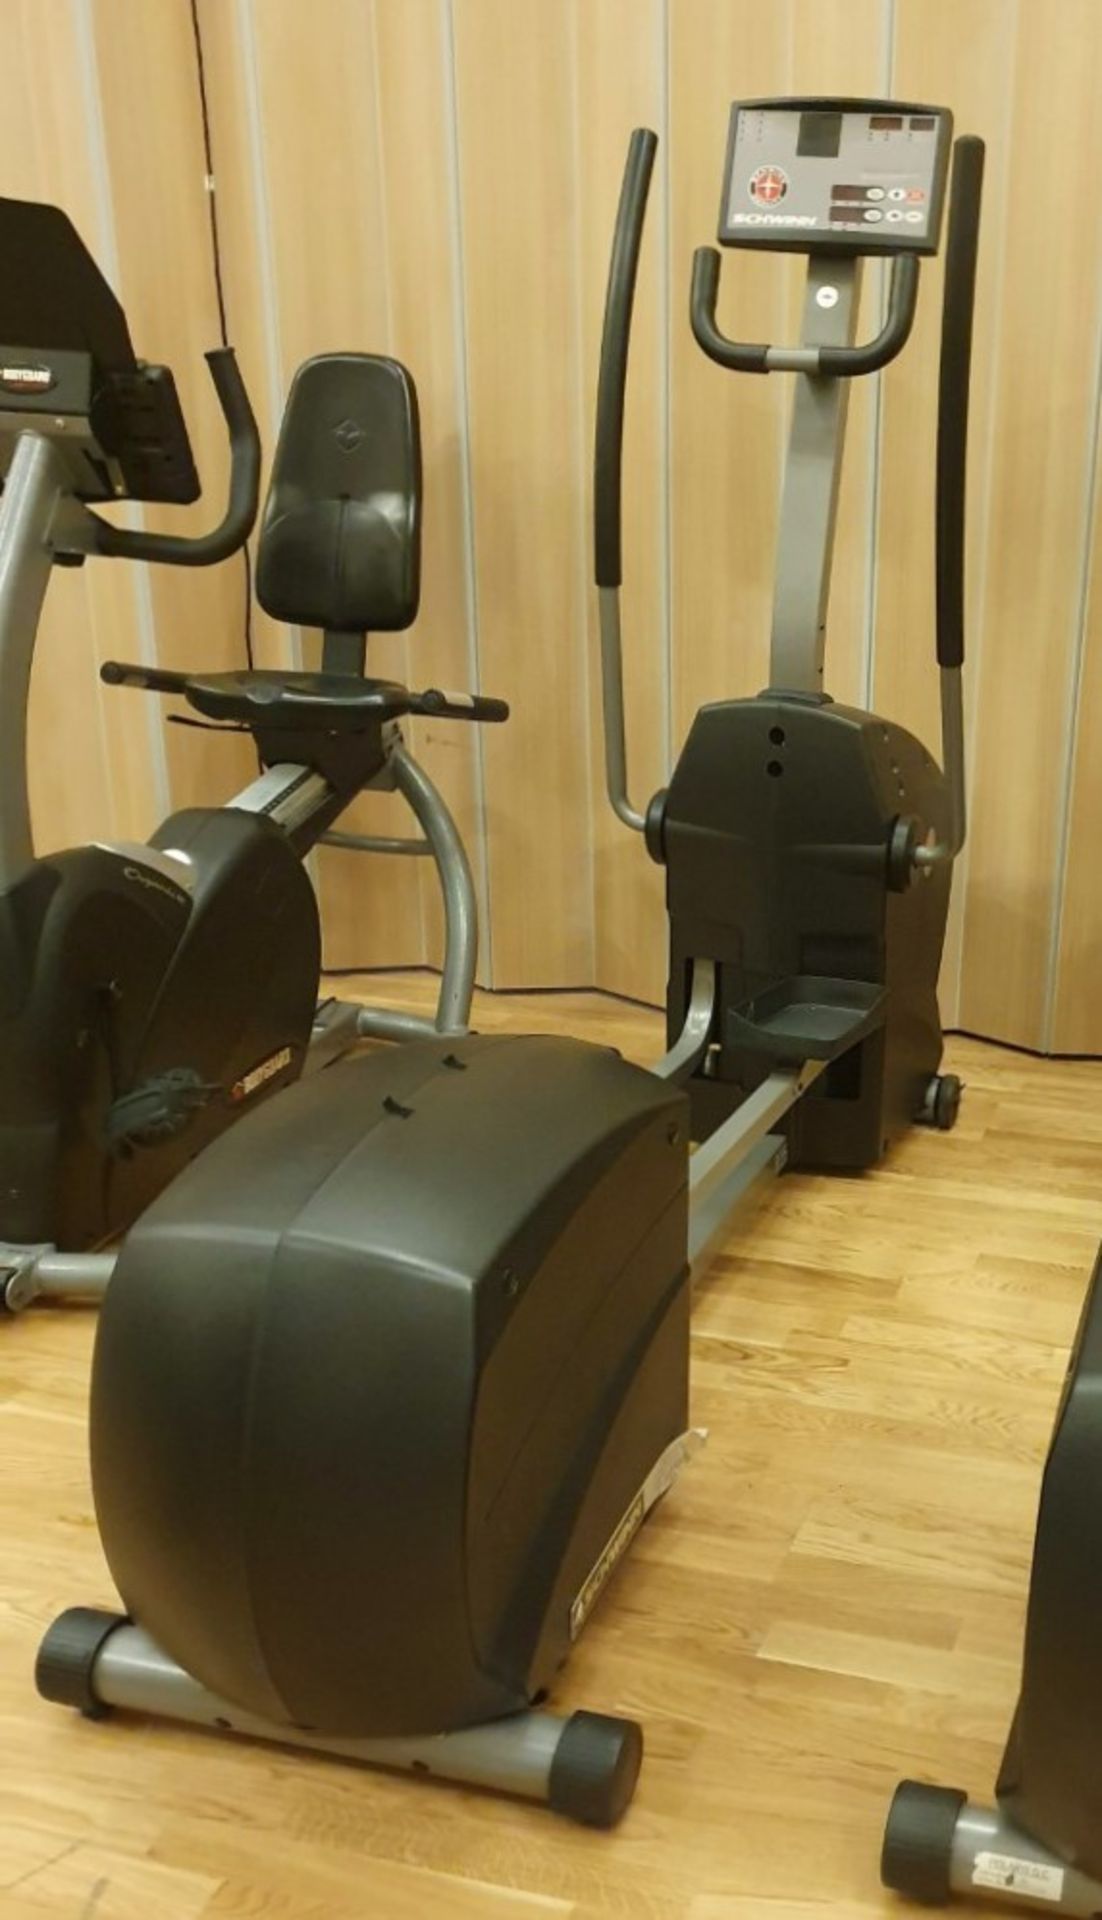 1 x Schwinn Elliptical Cross Trainer Gym Machine - Model 410i - CL552 - Location: West Yorkshire - Image 8 of 8